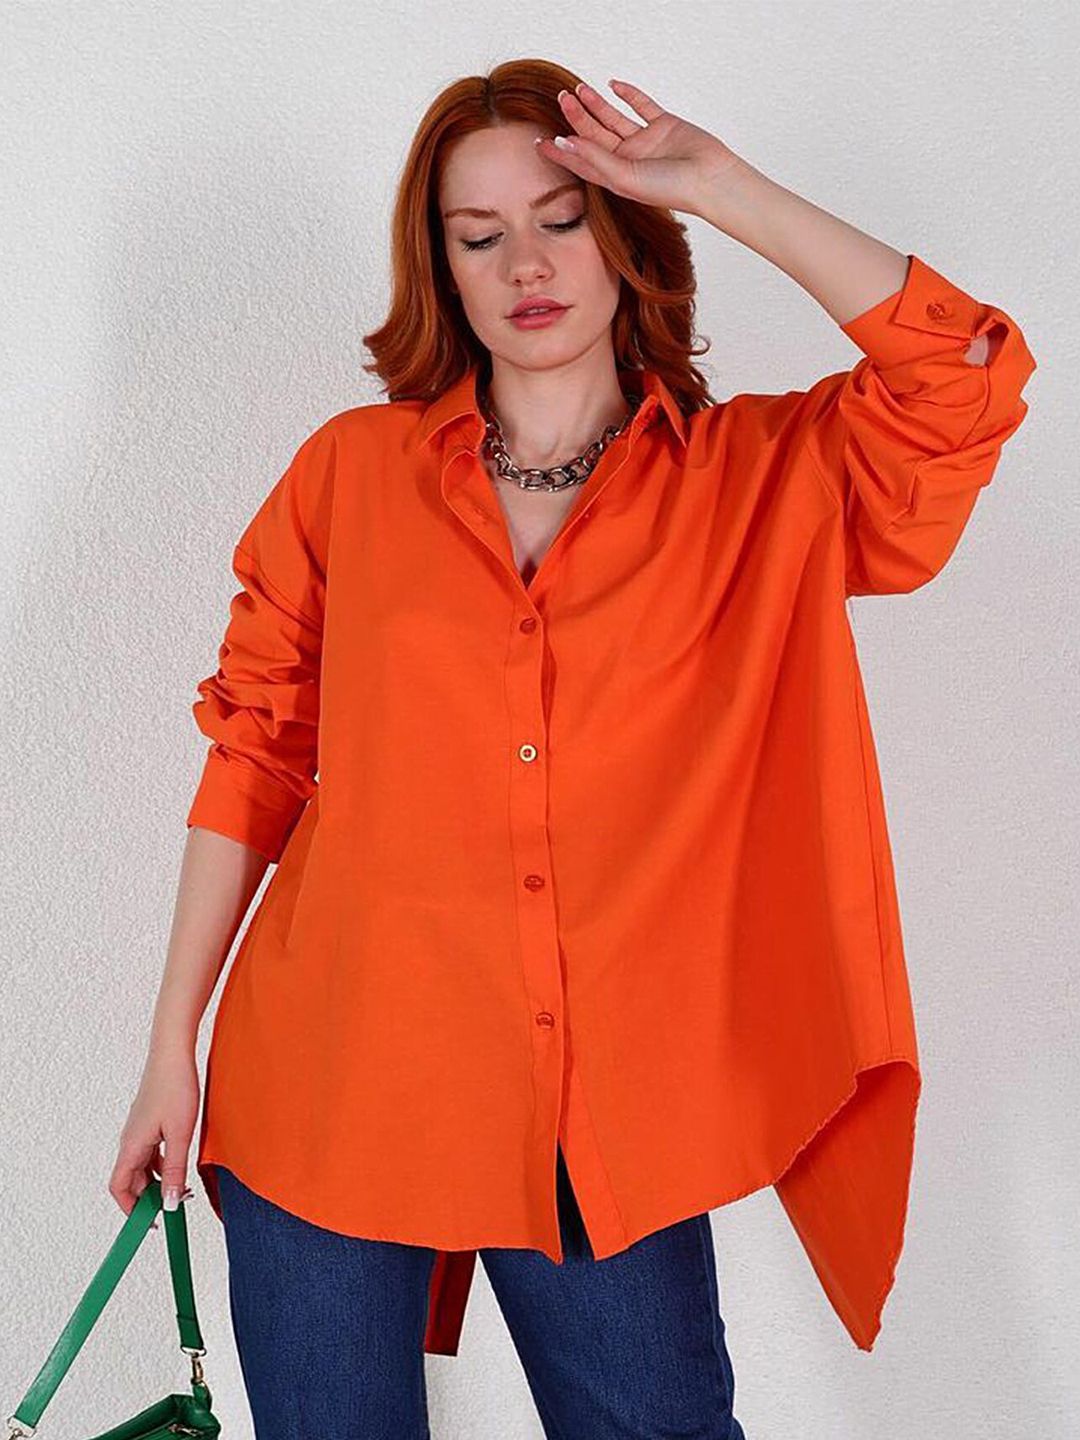 LULU & SKY Orange Roll-Up Sleeves Shirt Style Top Price in India